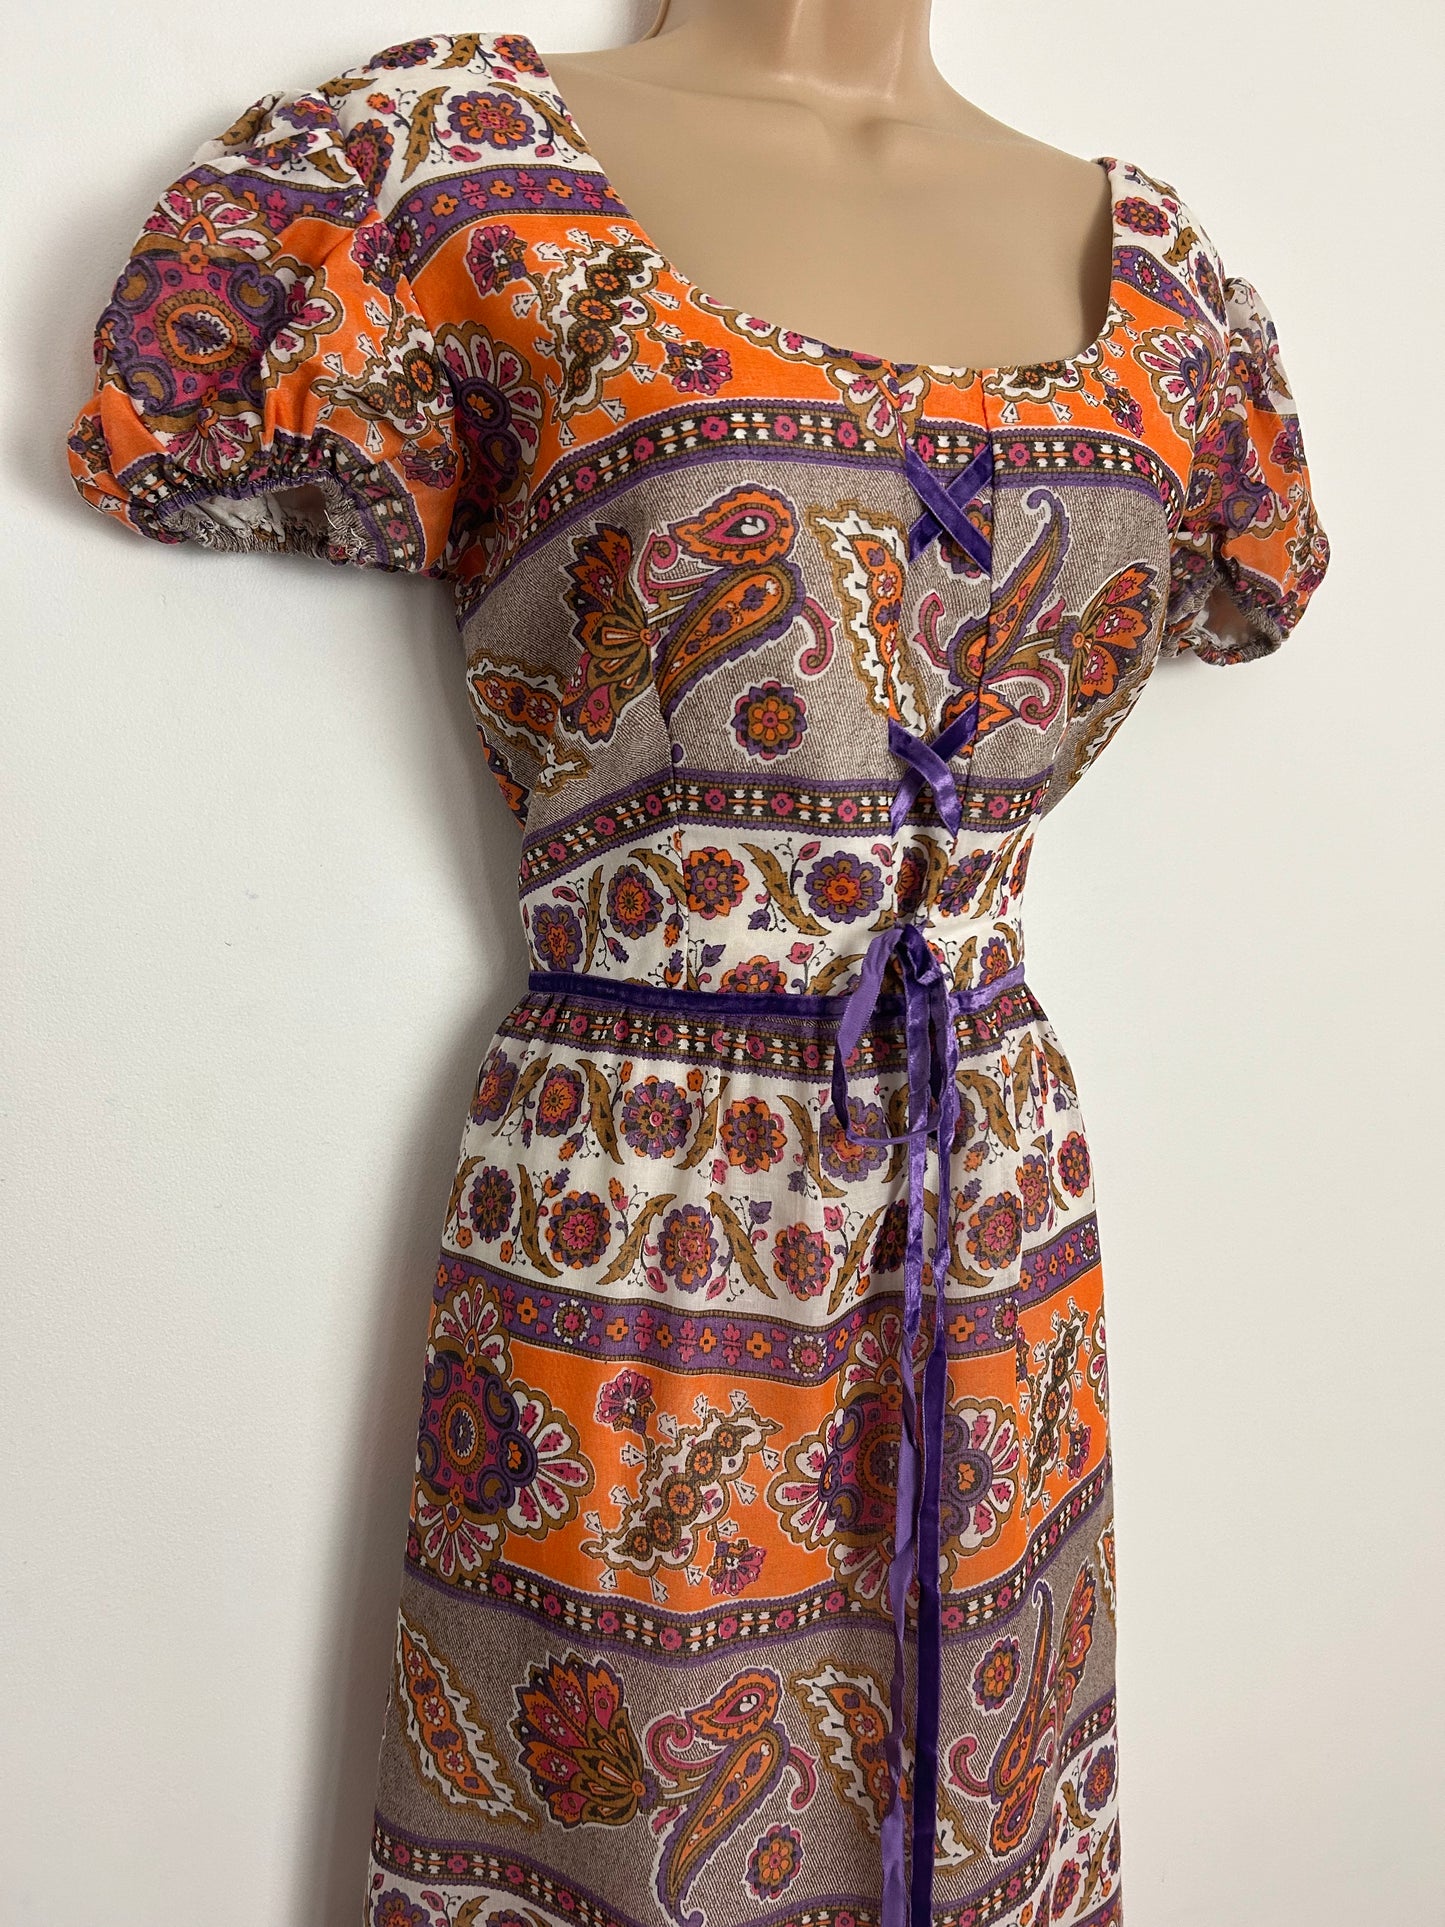 Vintage 1970s CALIFORNIA THE LOOK YOU LOVE UK Size 10-12 Orange Beige & Purple Floral & Paisley Print Cotton Mix Prairie Maxi Dress